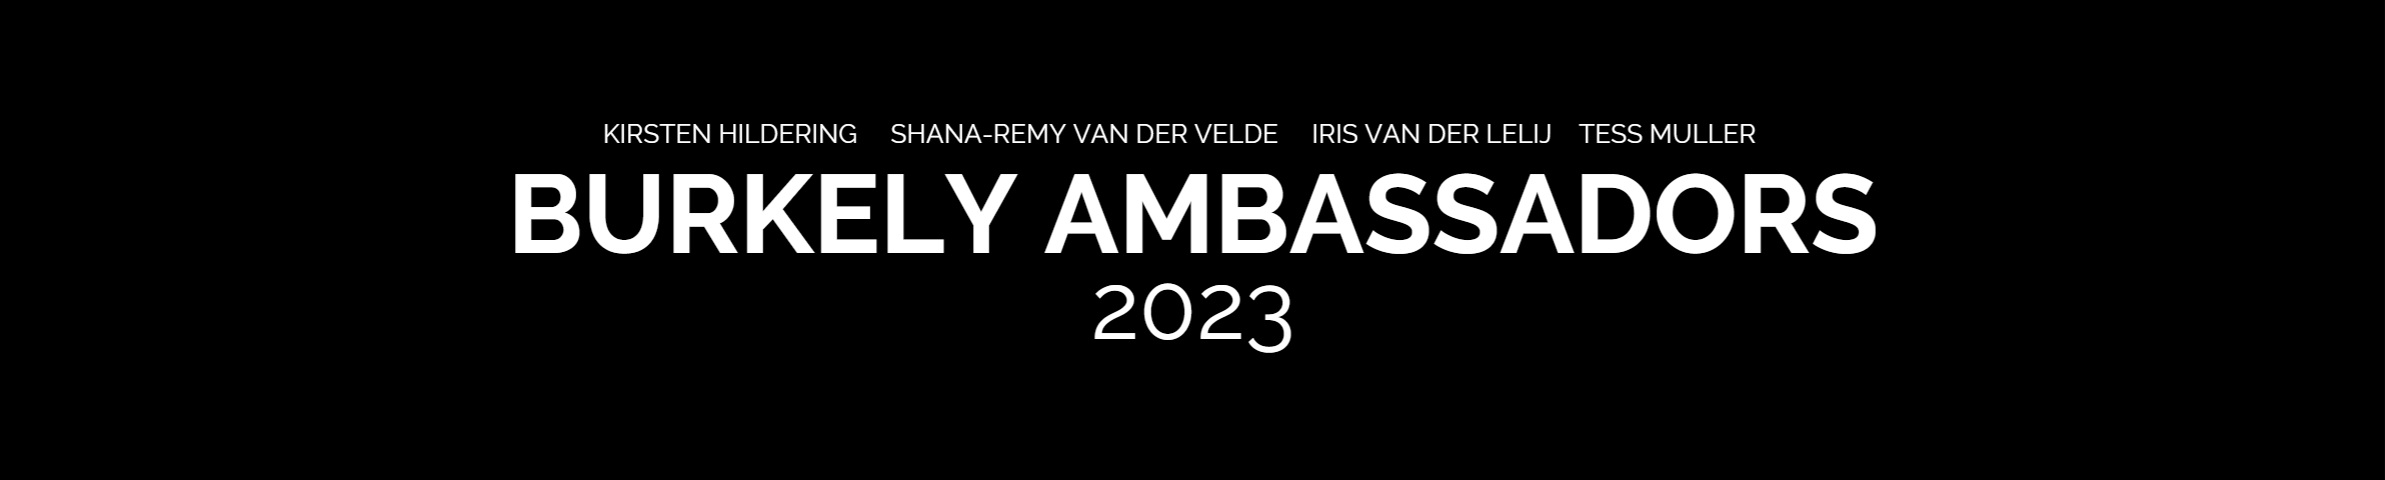 //burkely.nl/wp-content/uploads/2023/02/Banner-pagina-burkely-ambassadors-2023.jpg